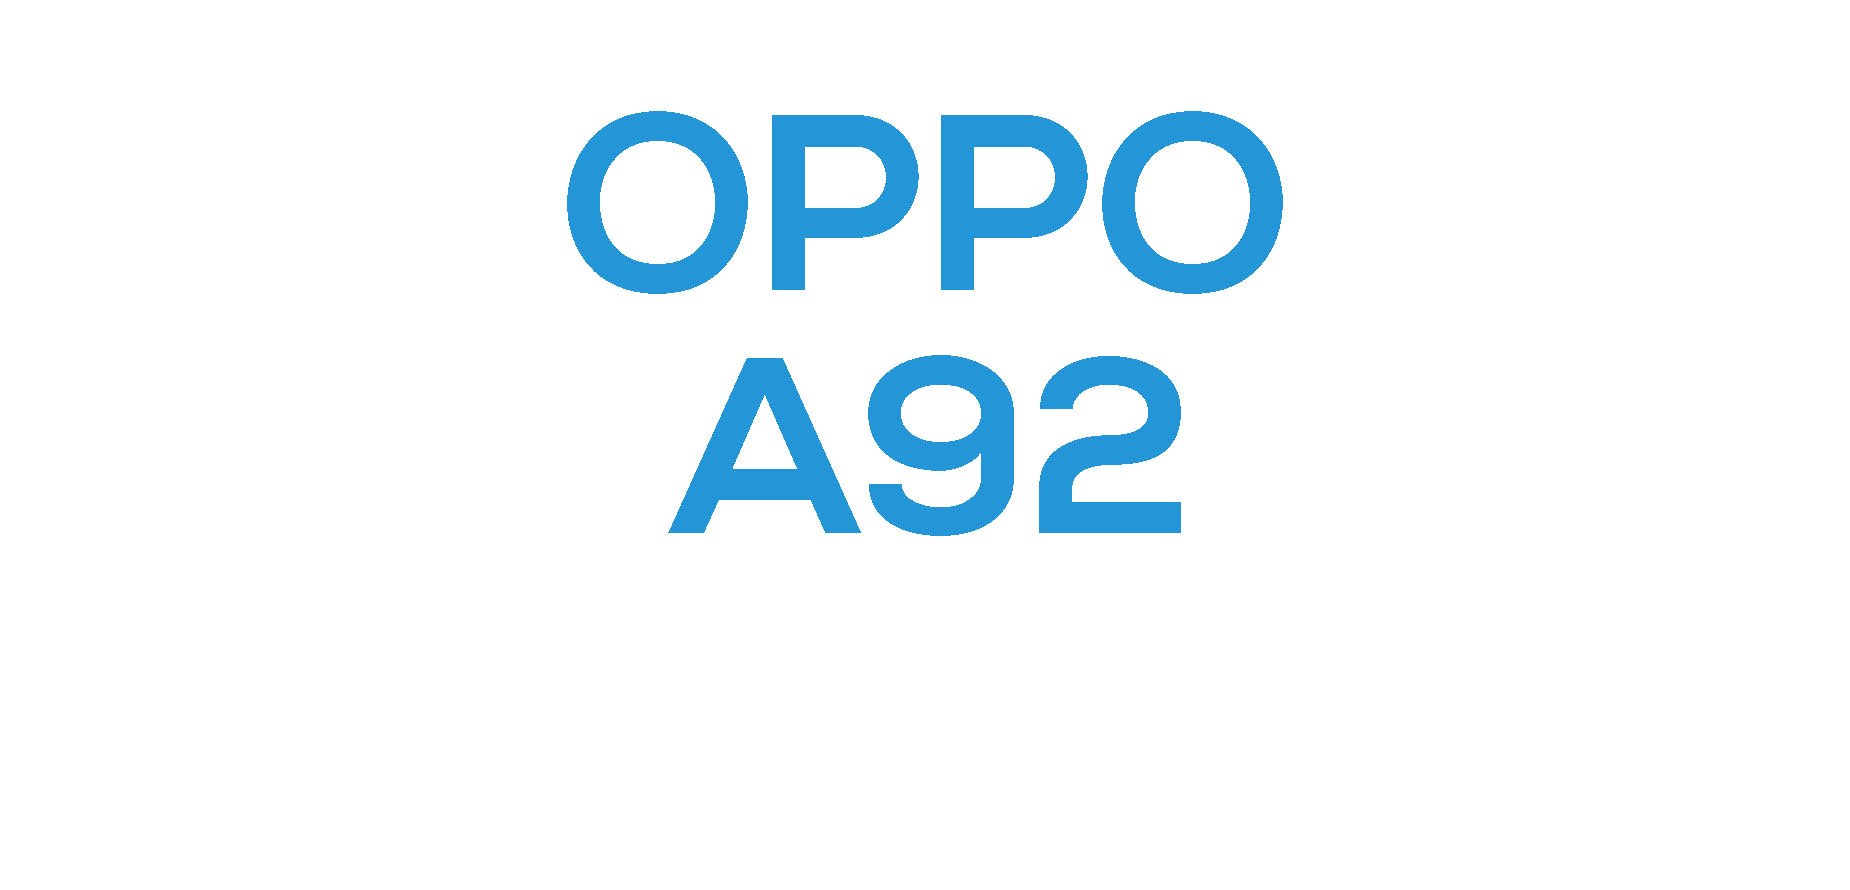 OPPO A92